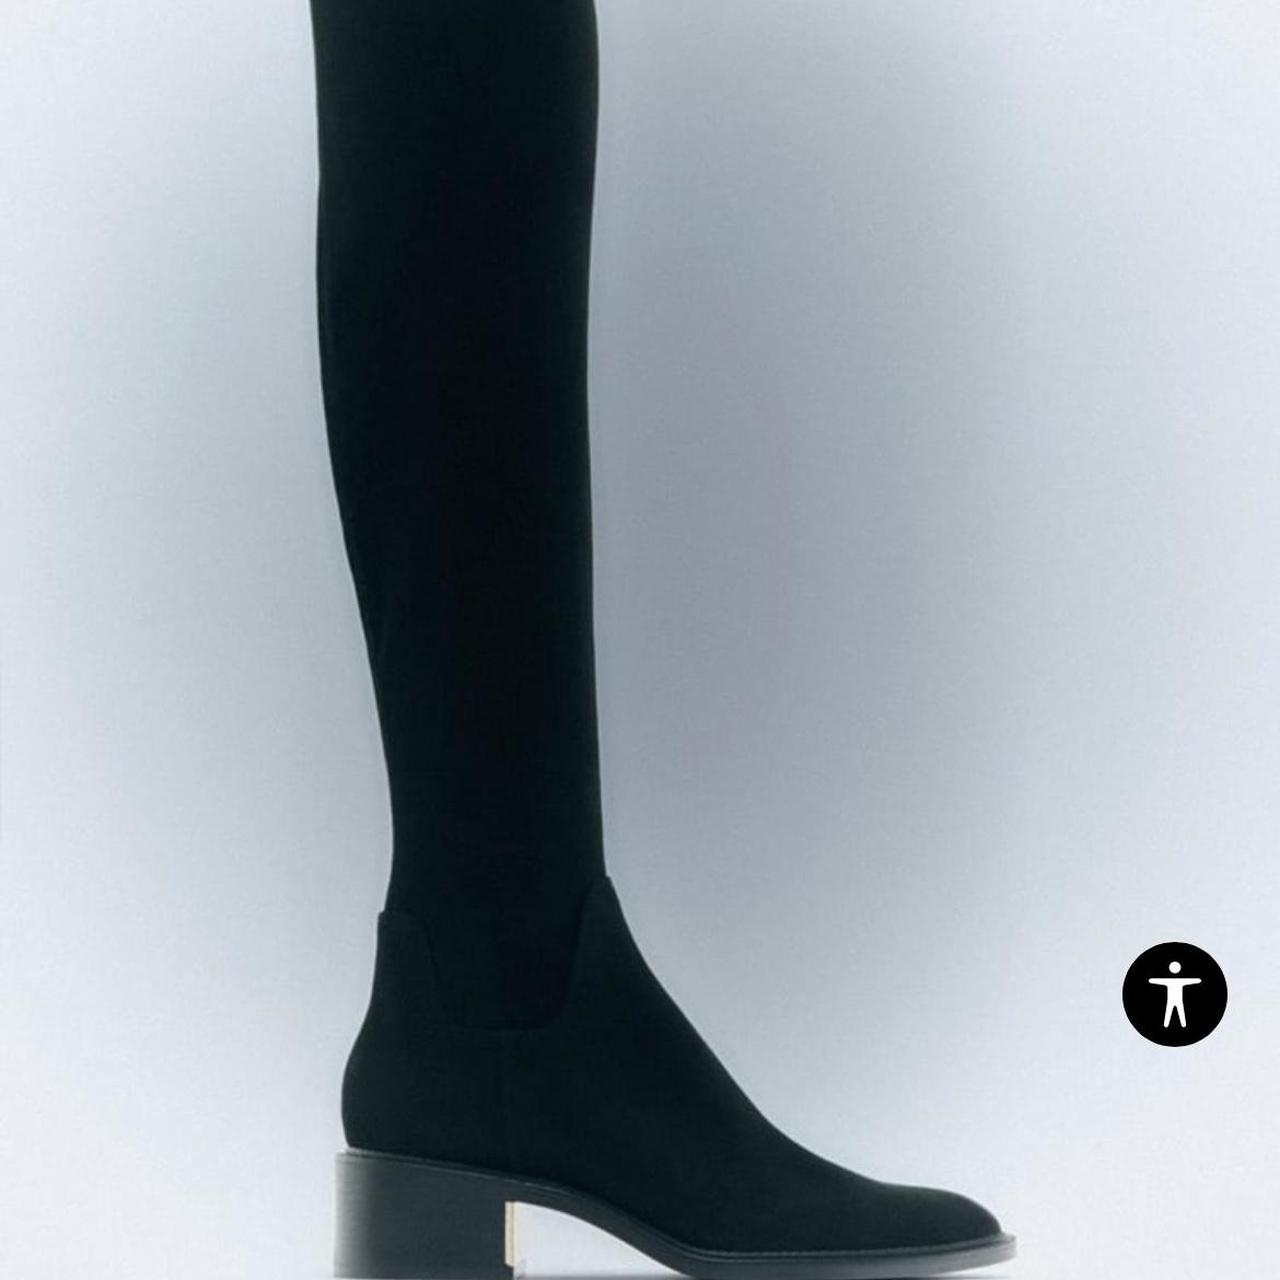 Zara over the knee black boots size 5 - Depop